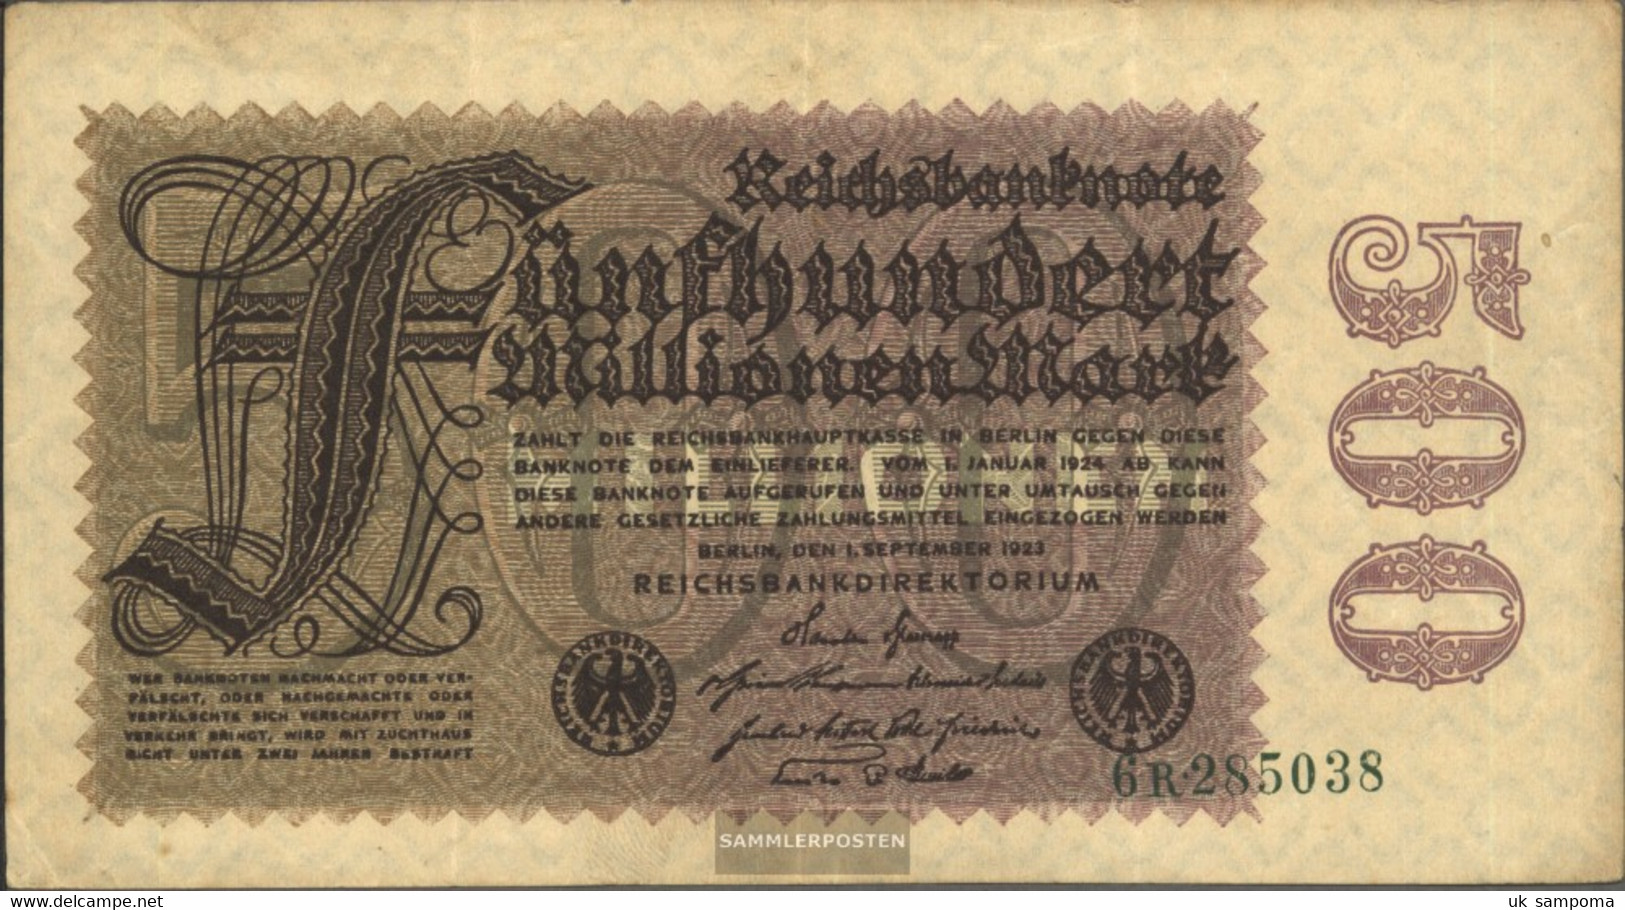 German Empire Rosenbg: 109b, Privatfirmendruck Watermark Cabbage Used (III) 1923 500 Million Mark - 500 Mio. Mark